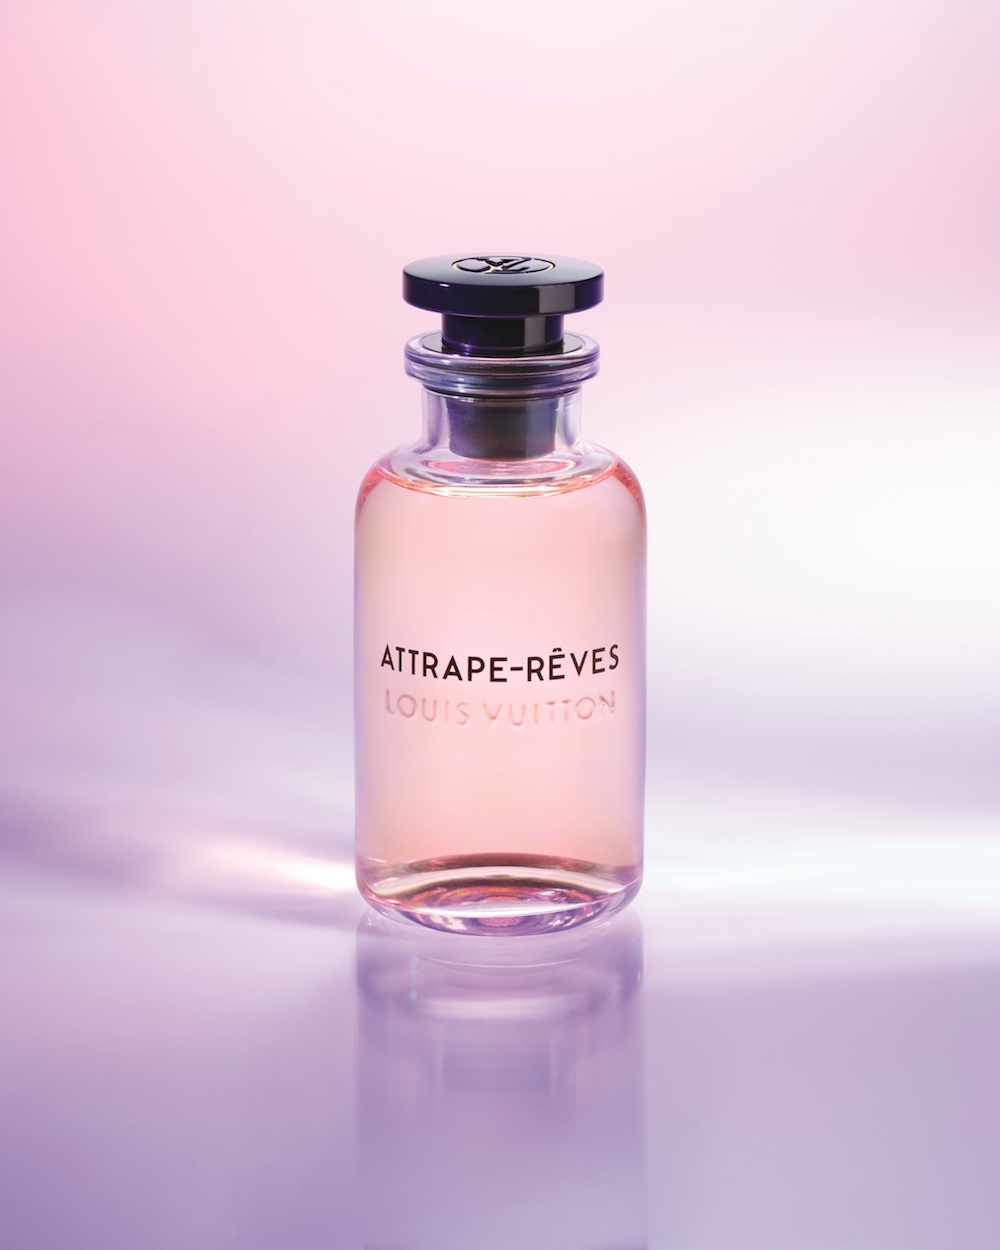 NEW LOUIS VUITTON Parfum PERFUME Heures d'Absence Mini Bottle Travel  SAMPLE 10ML